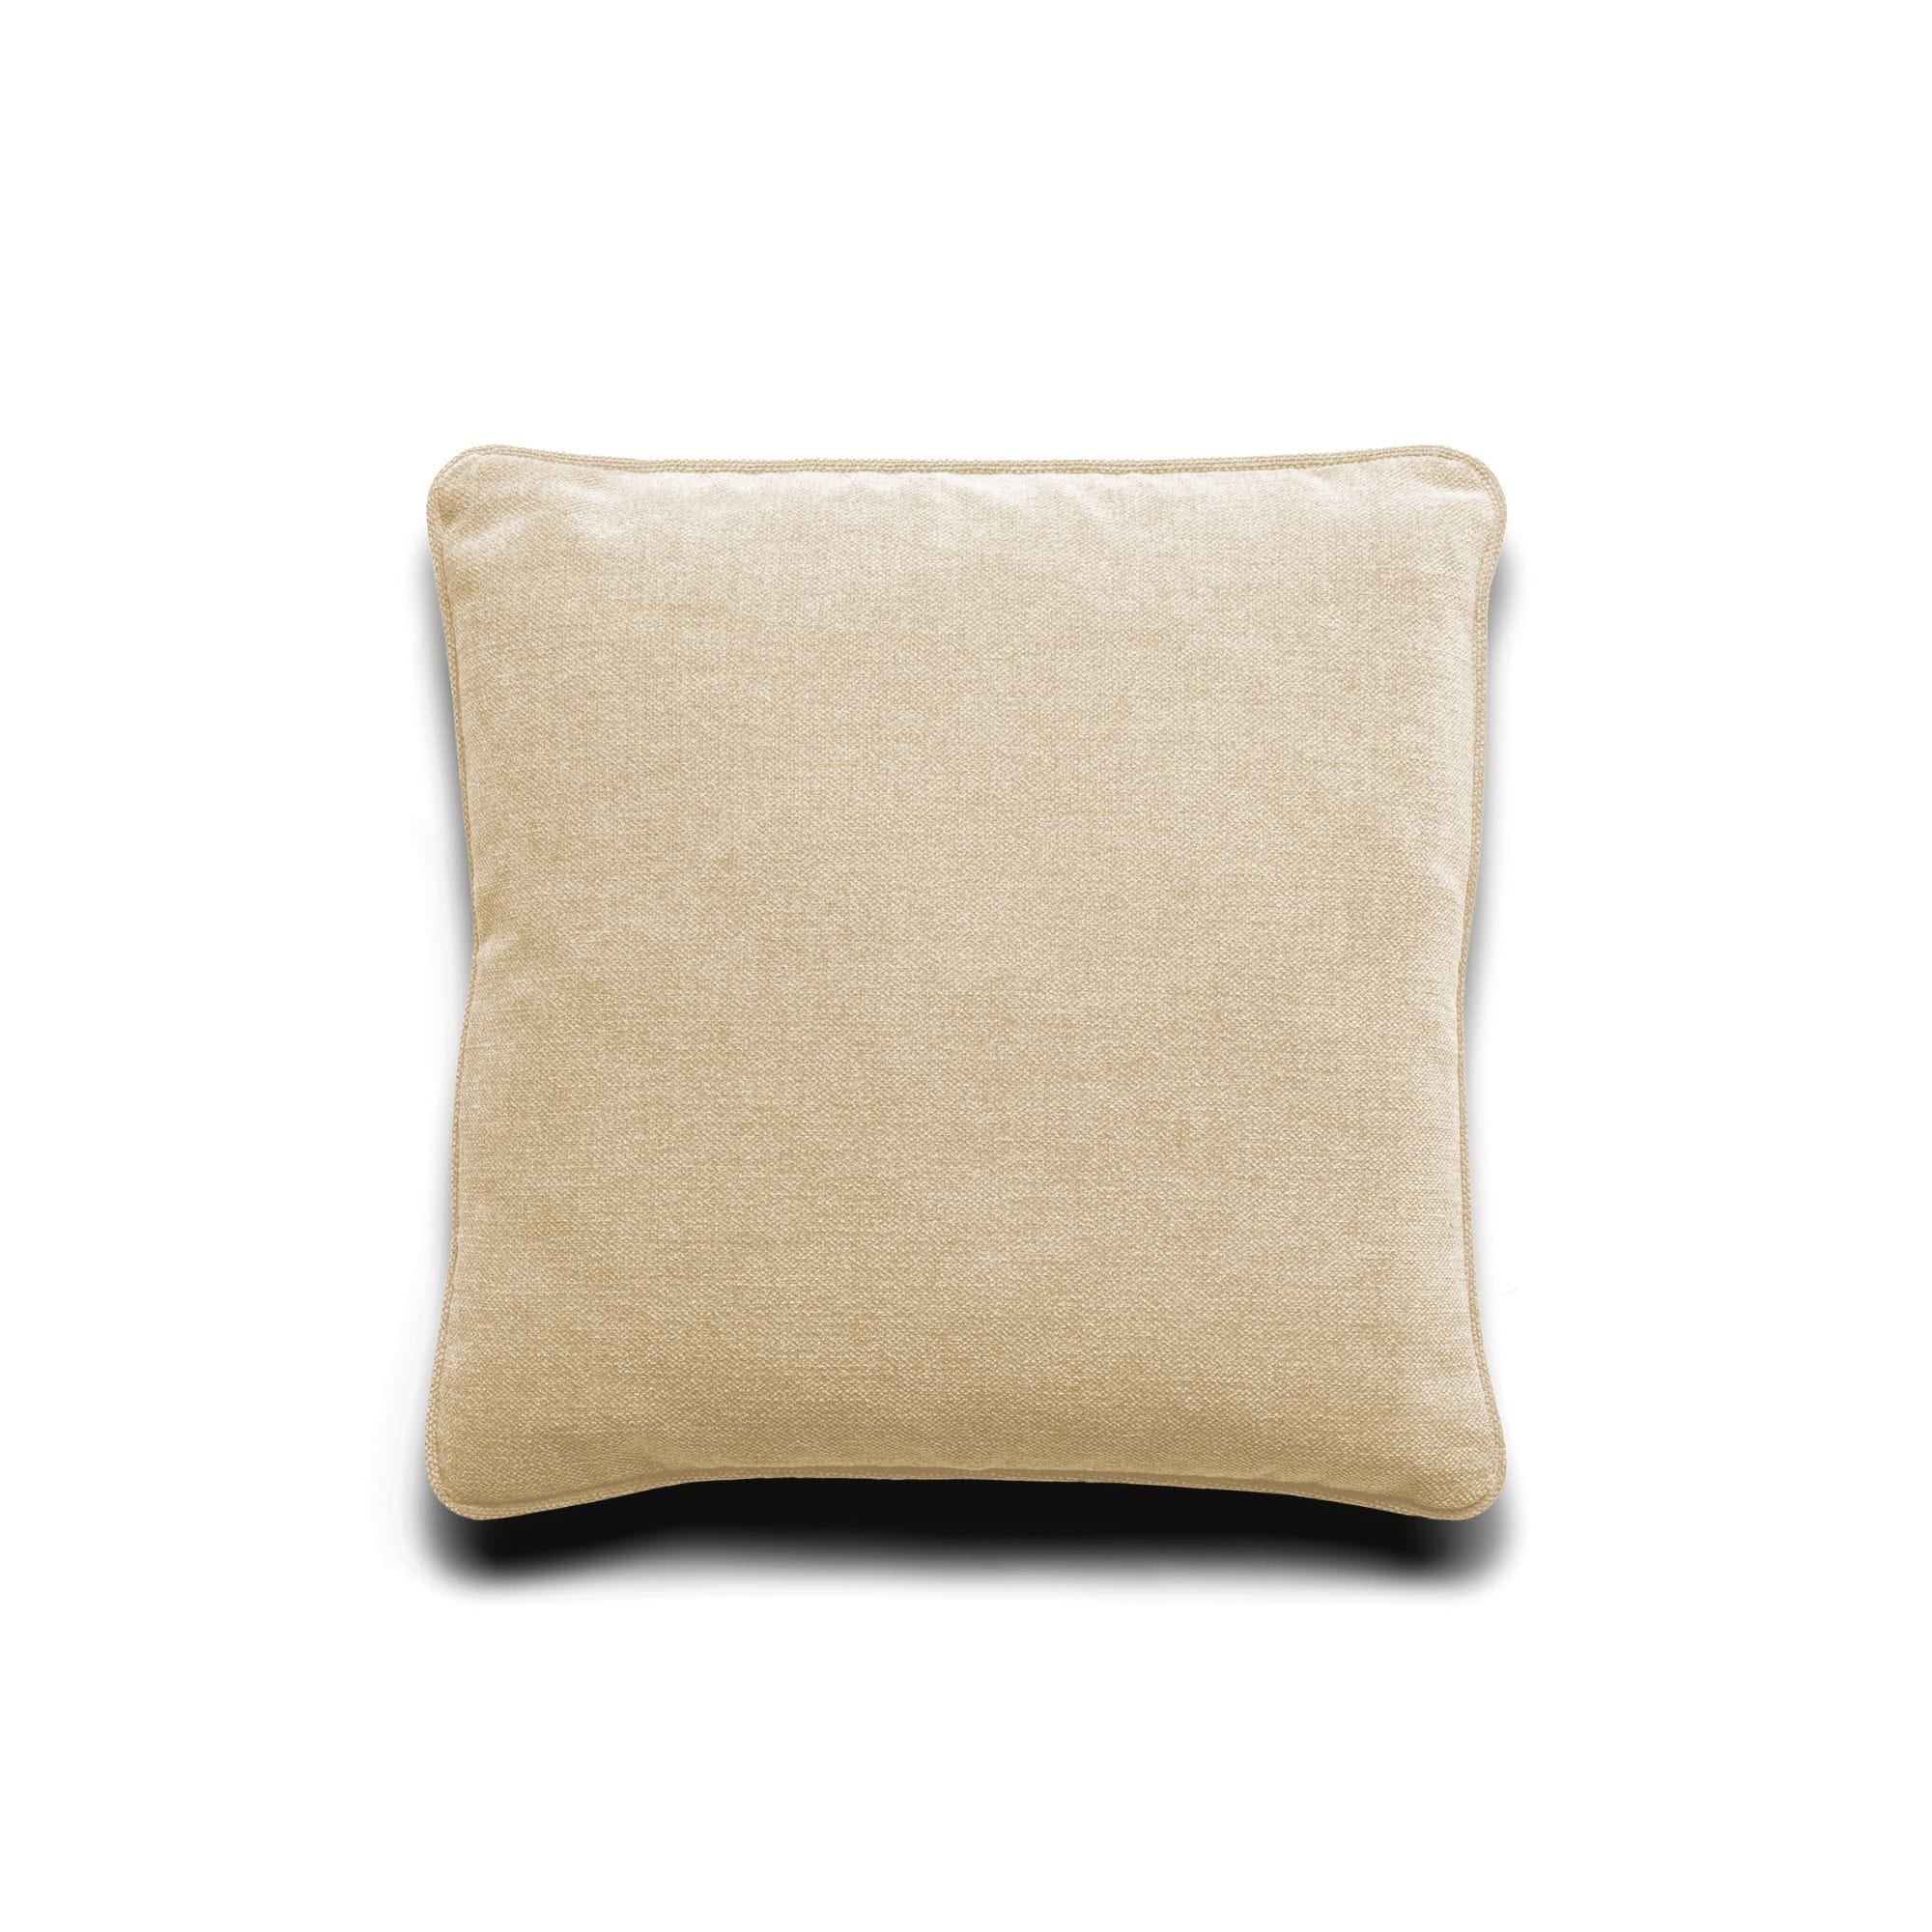 Decorative Pillow cover